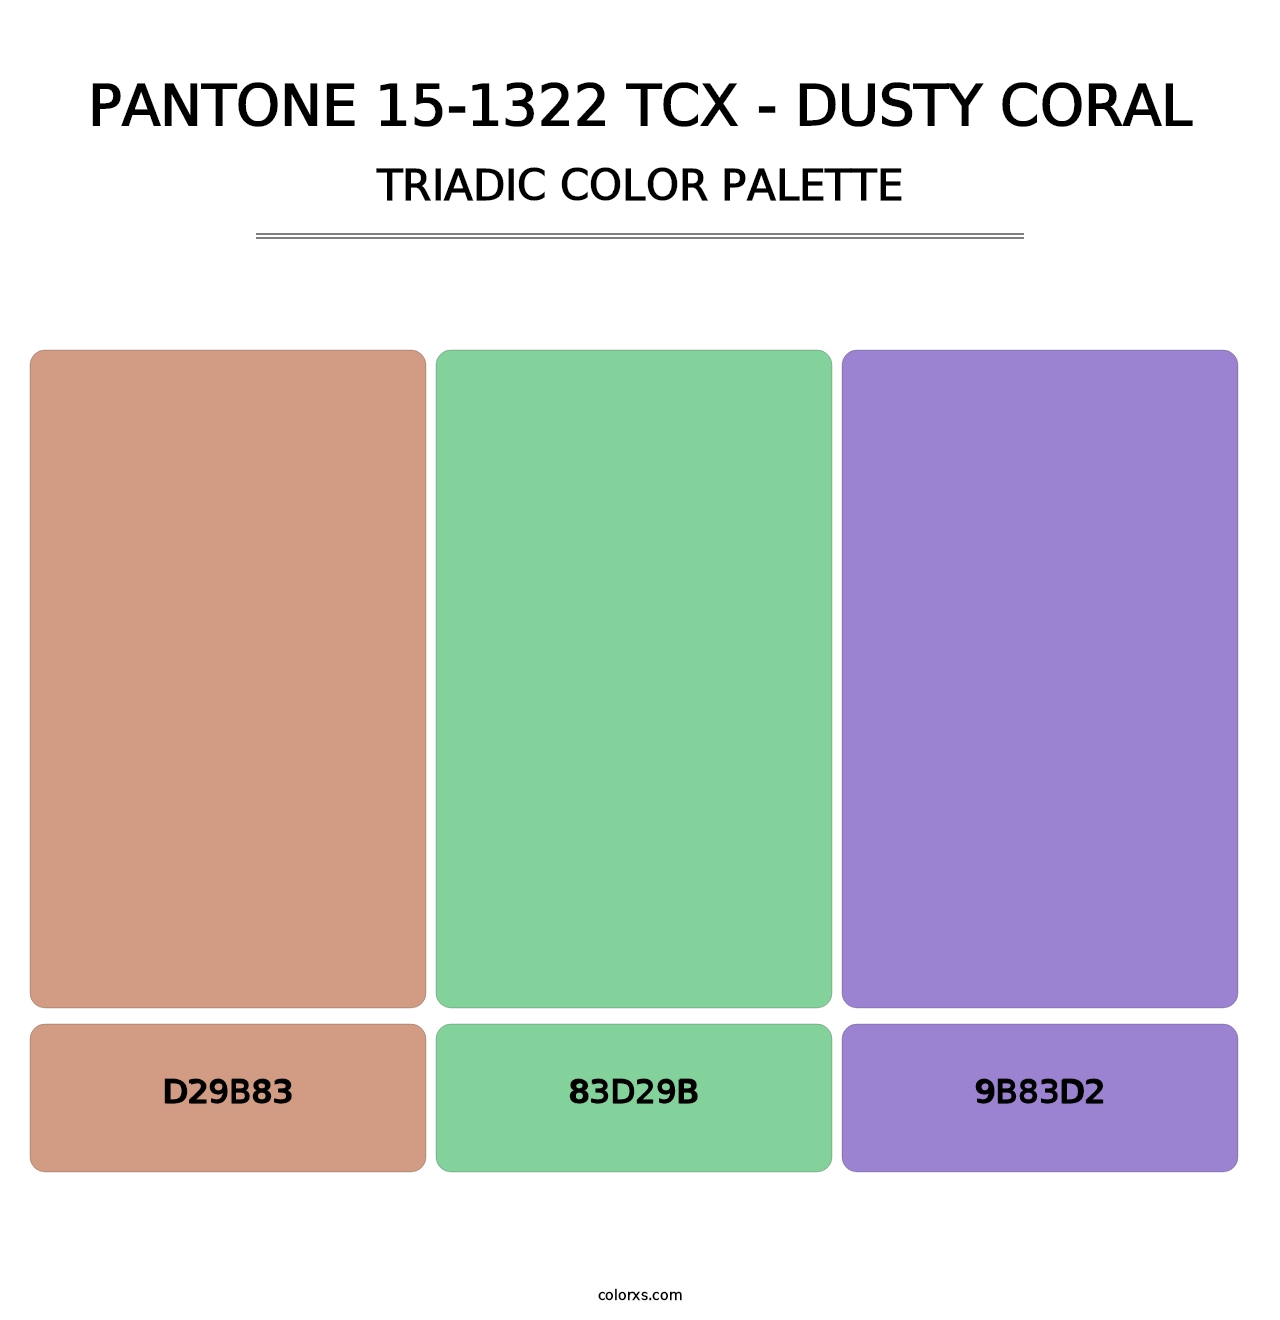 PANTONE 15-1322 TCX - Dusty Coral - Triadic Color Palette